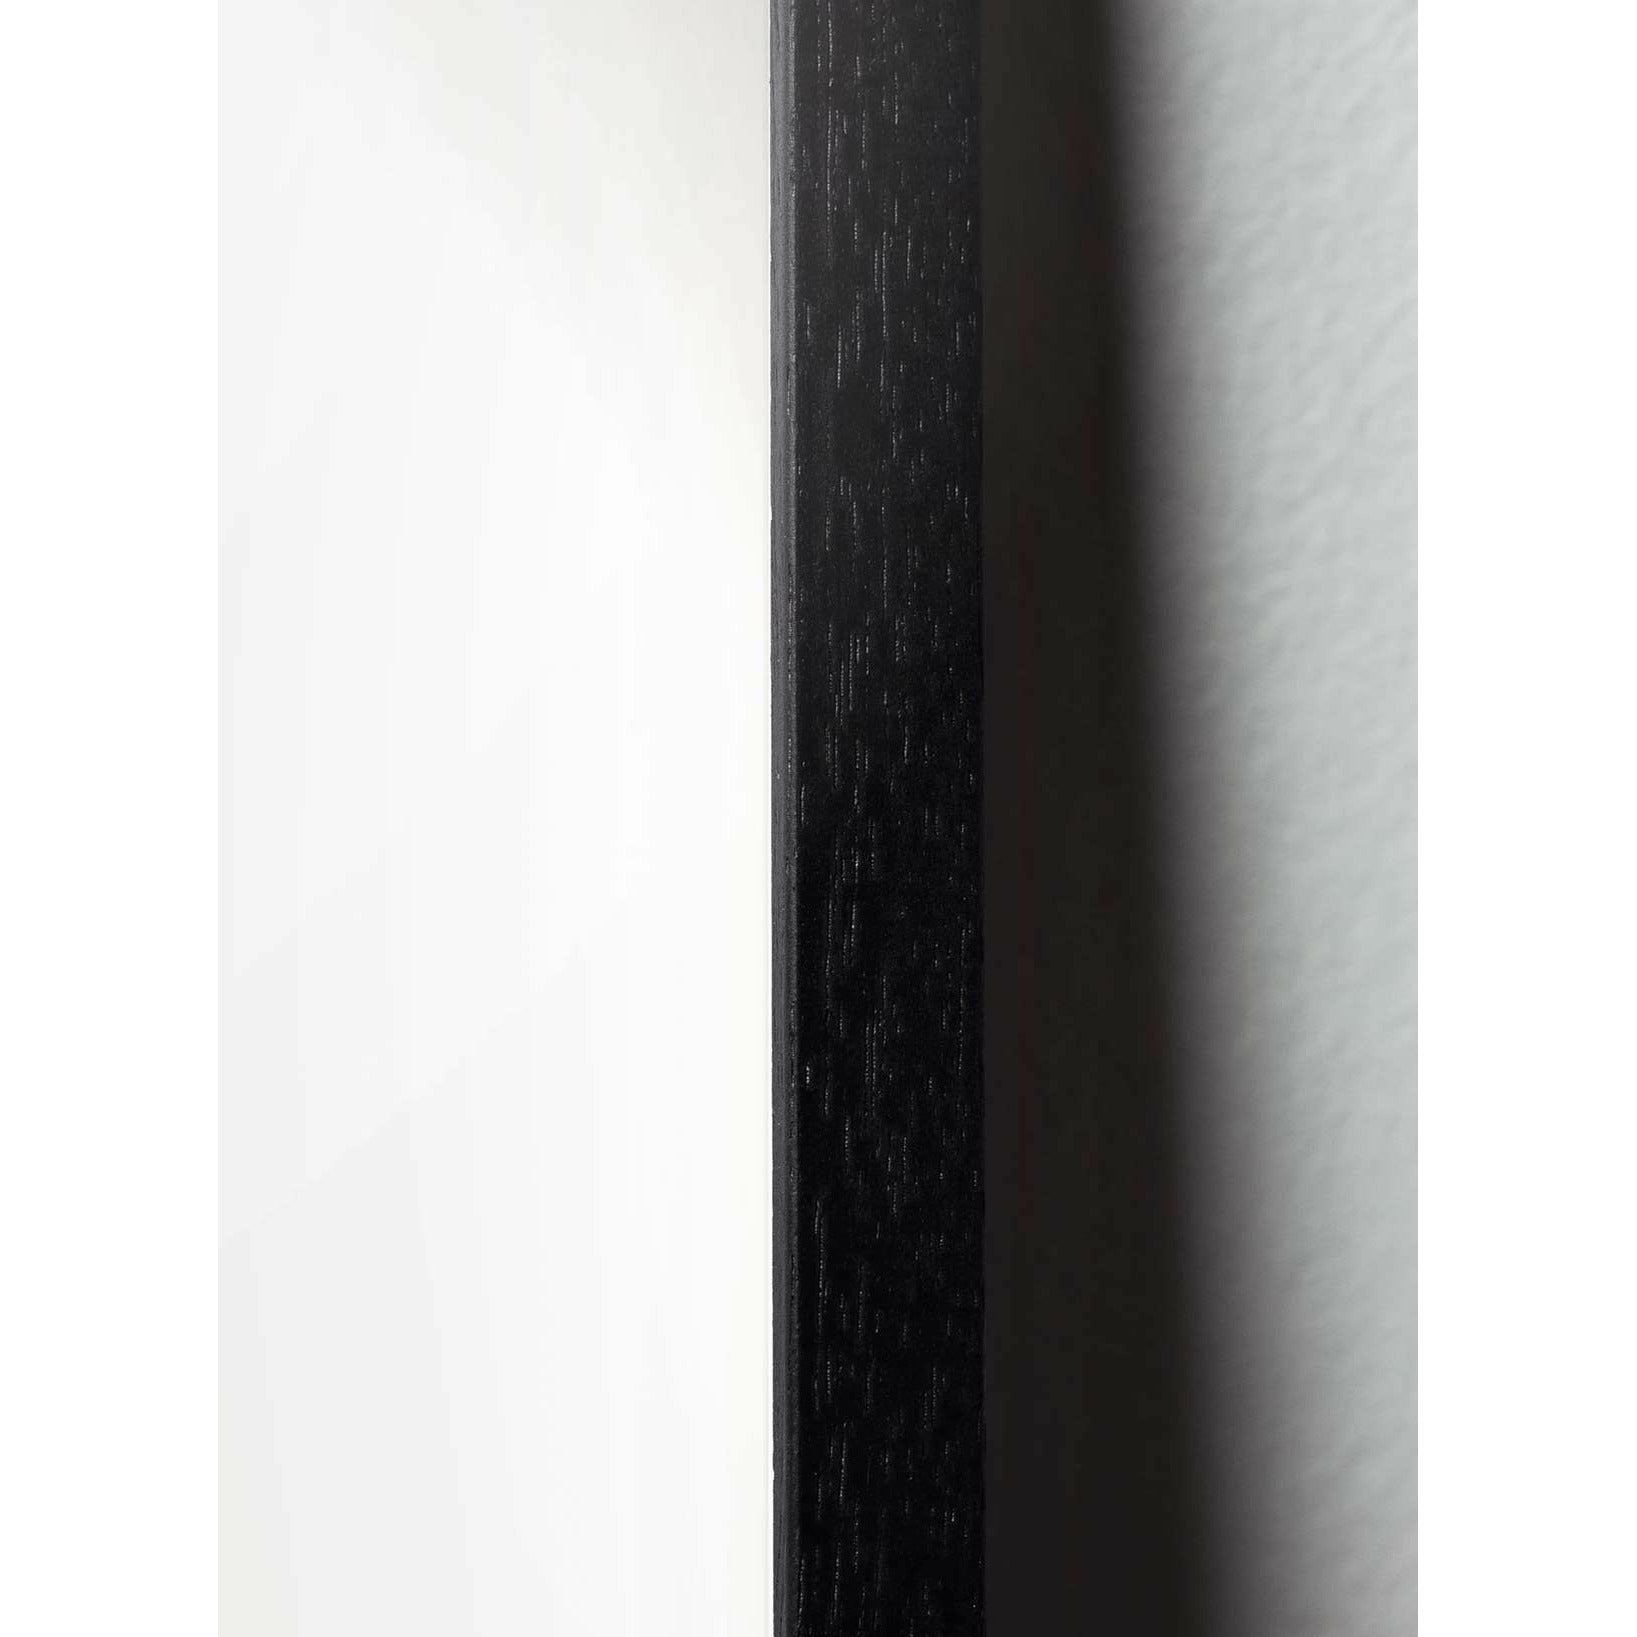 Brainchild Äggfigurens korsformat affisch, ram i svart -målat trä 30x40 cm, brunt